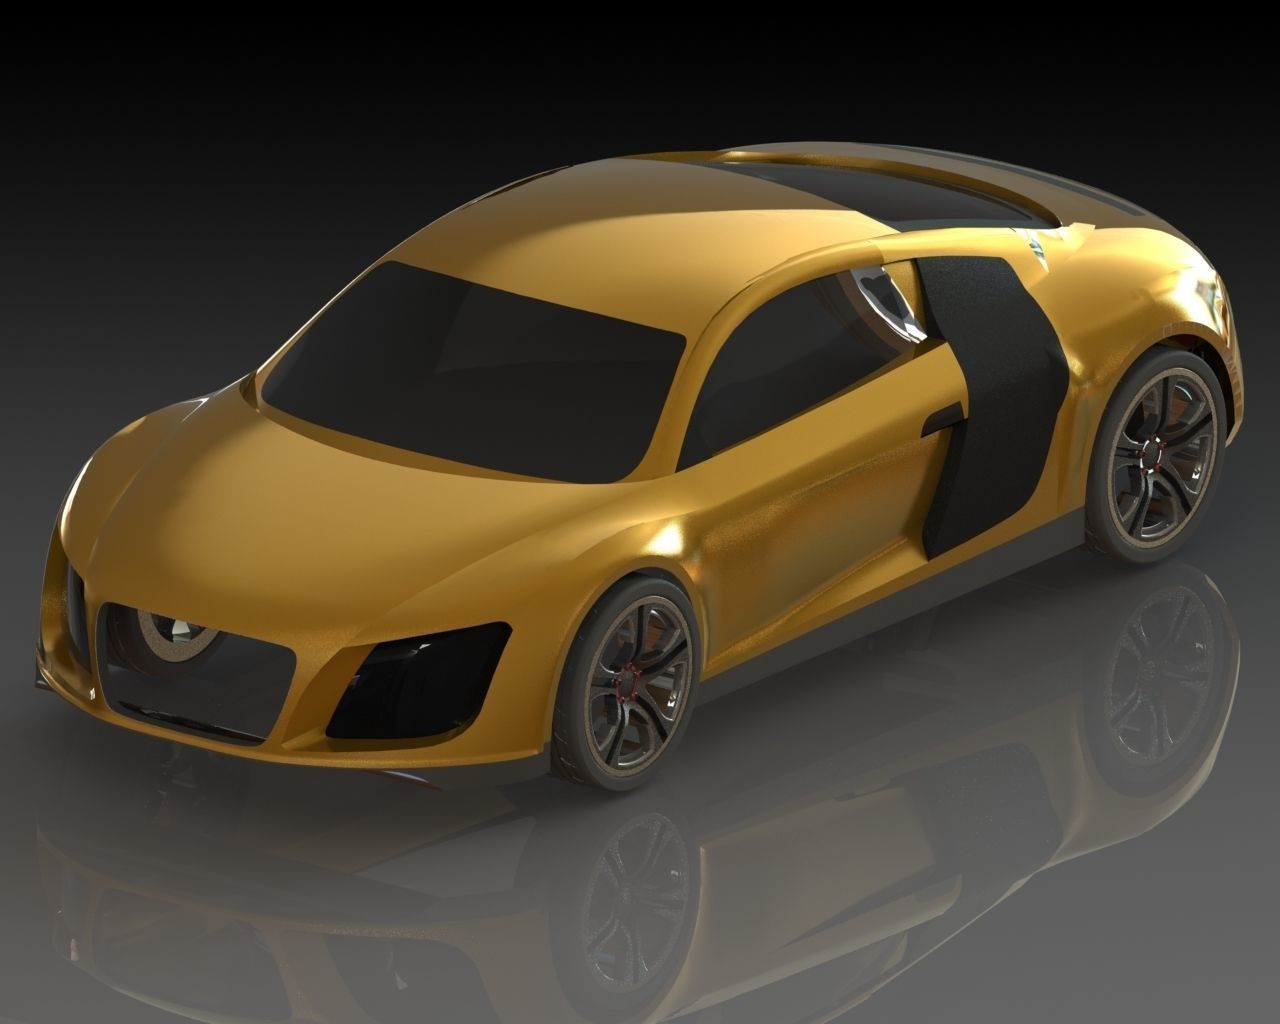 Audi 3D model